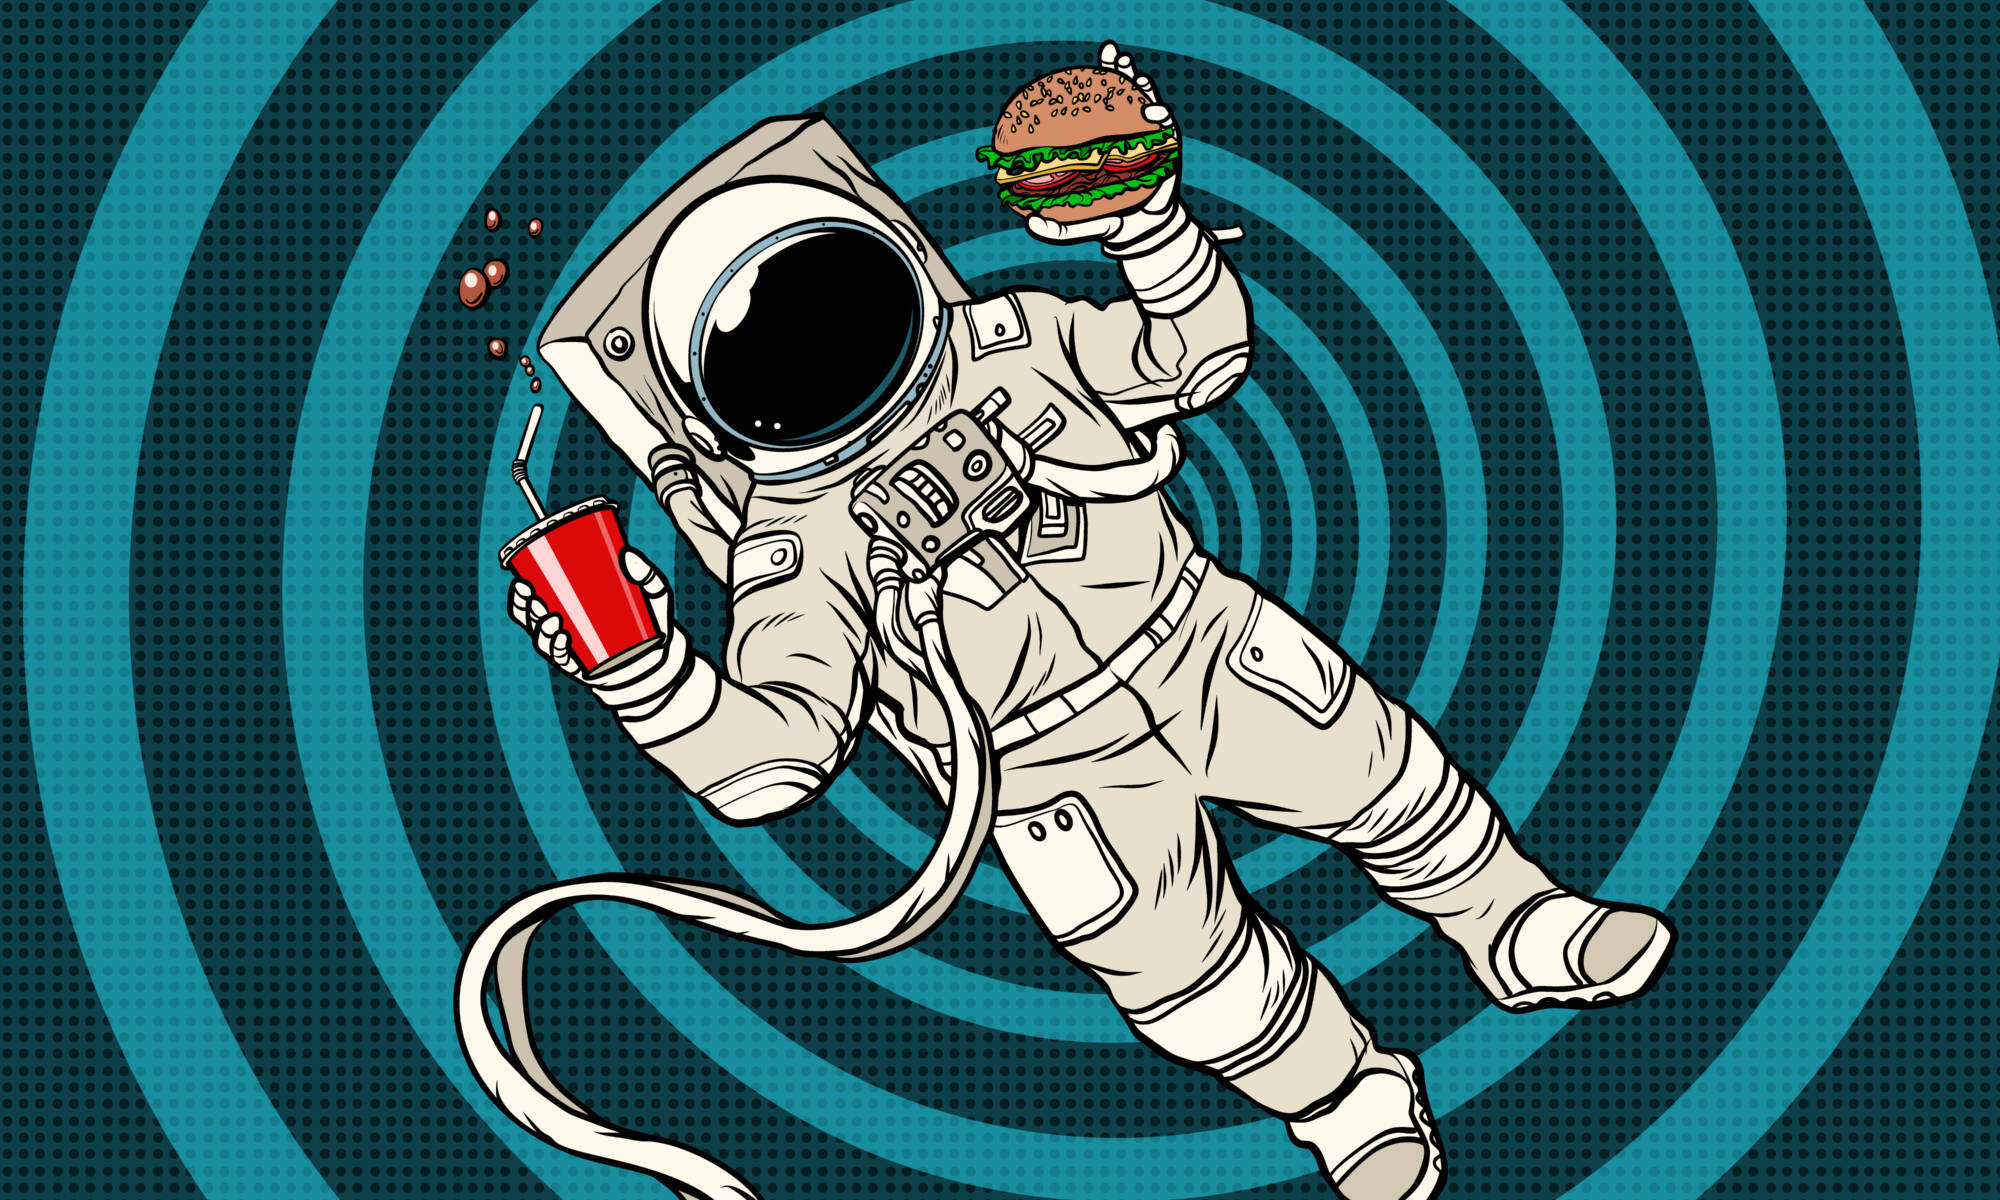 Astronaut in zero gravity with fast food. Pop art retro vector illustration